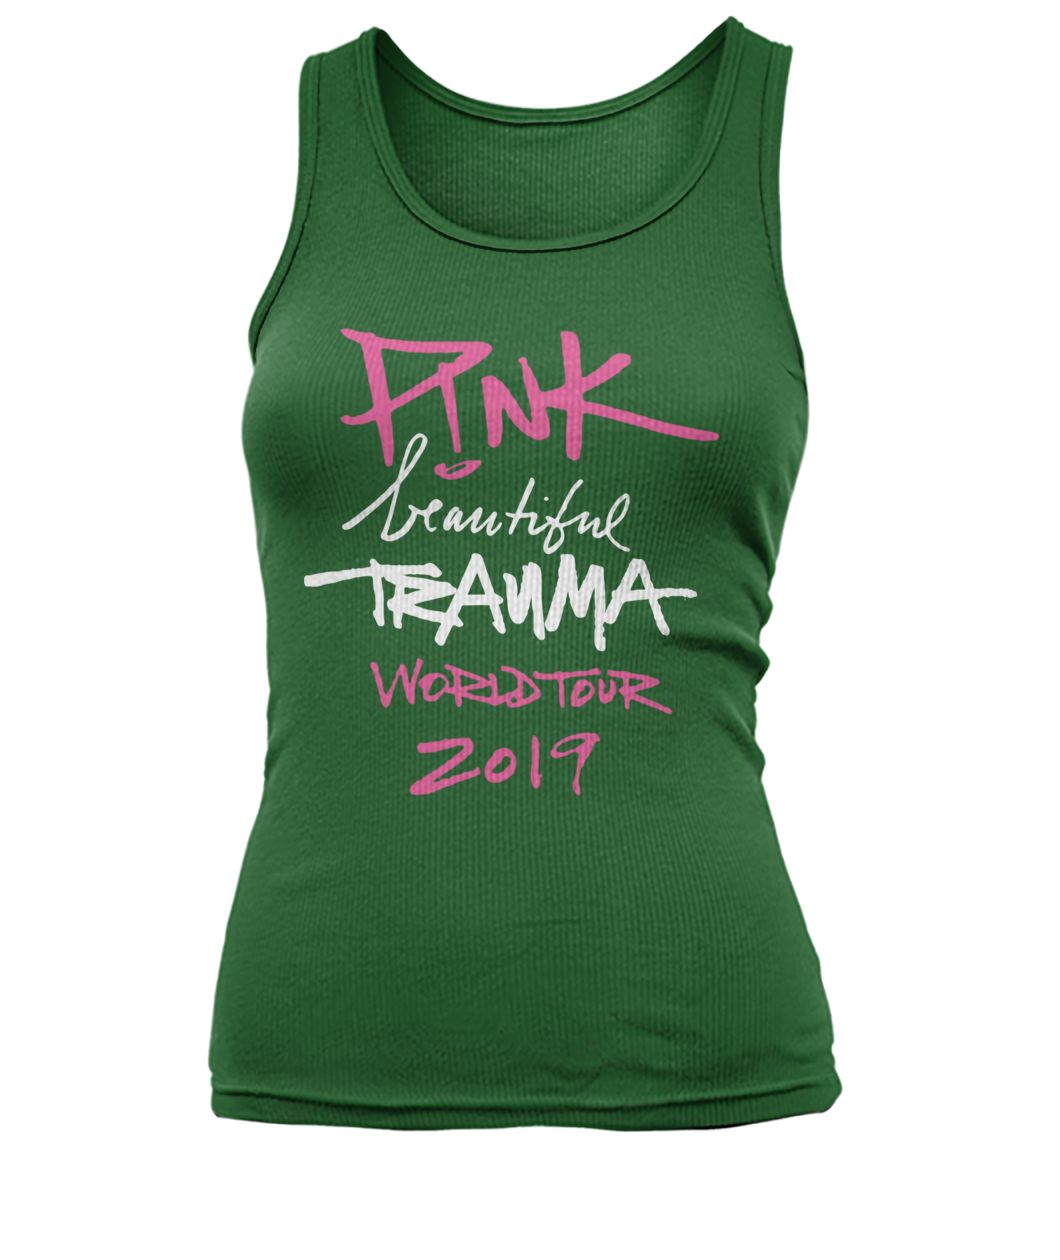 Beautiful trauma world tour 2019 pink women's tank top